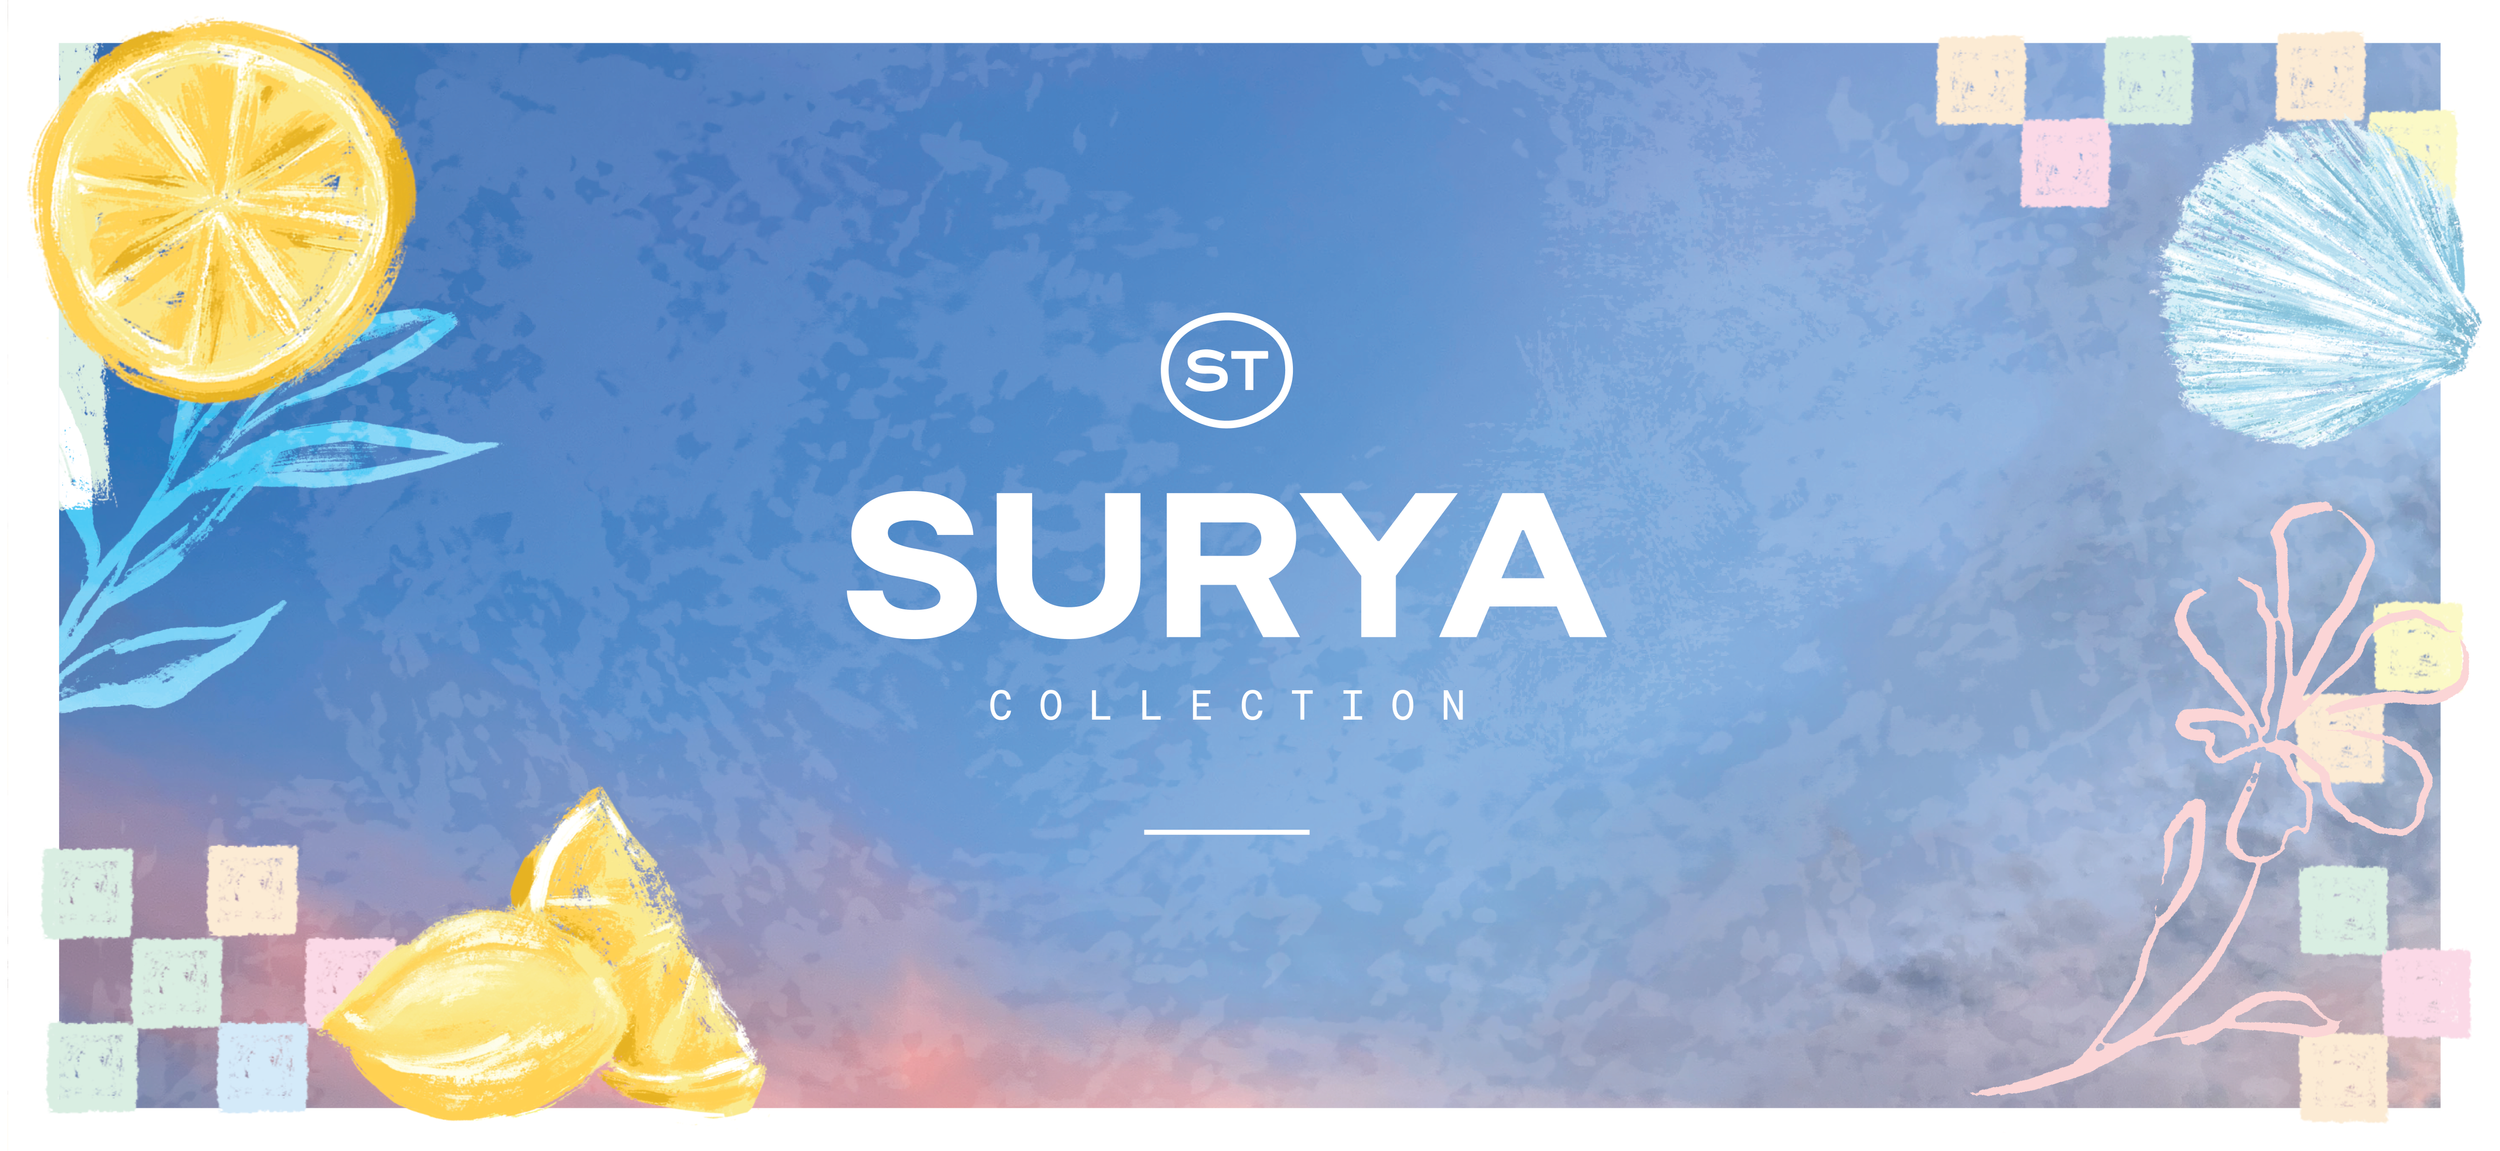 Surya Web Banner-01.png